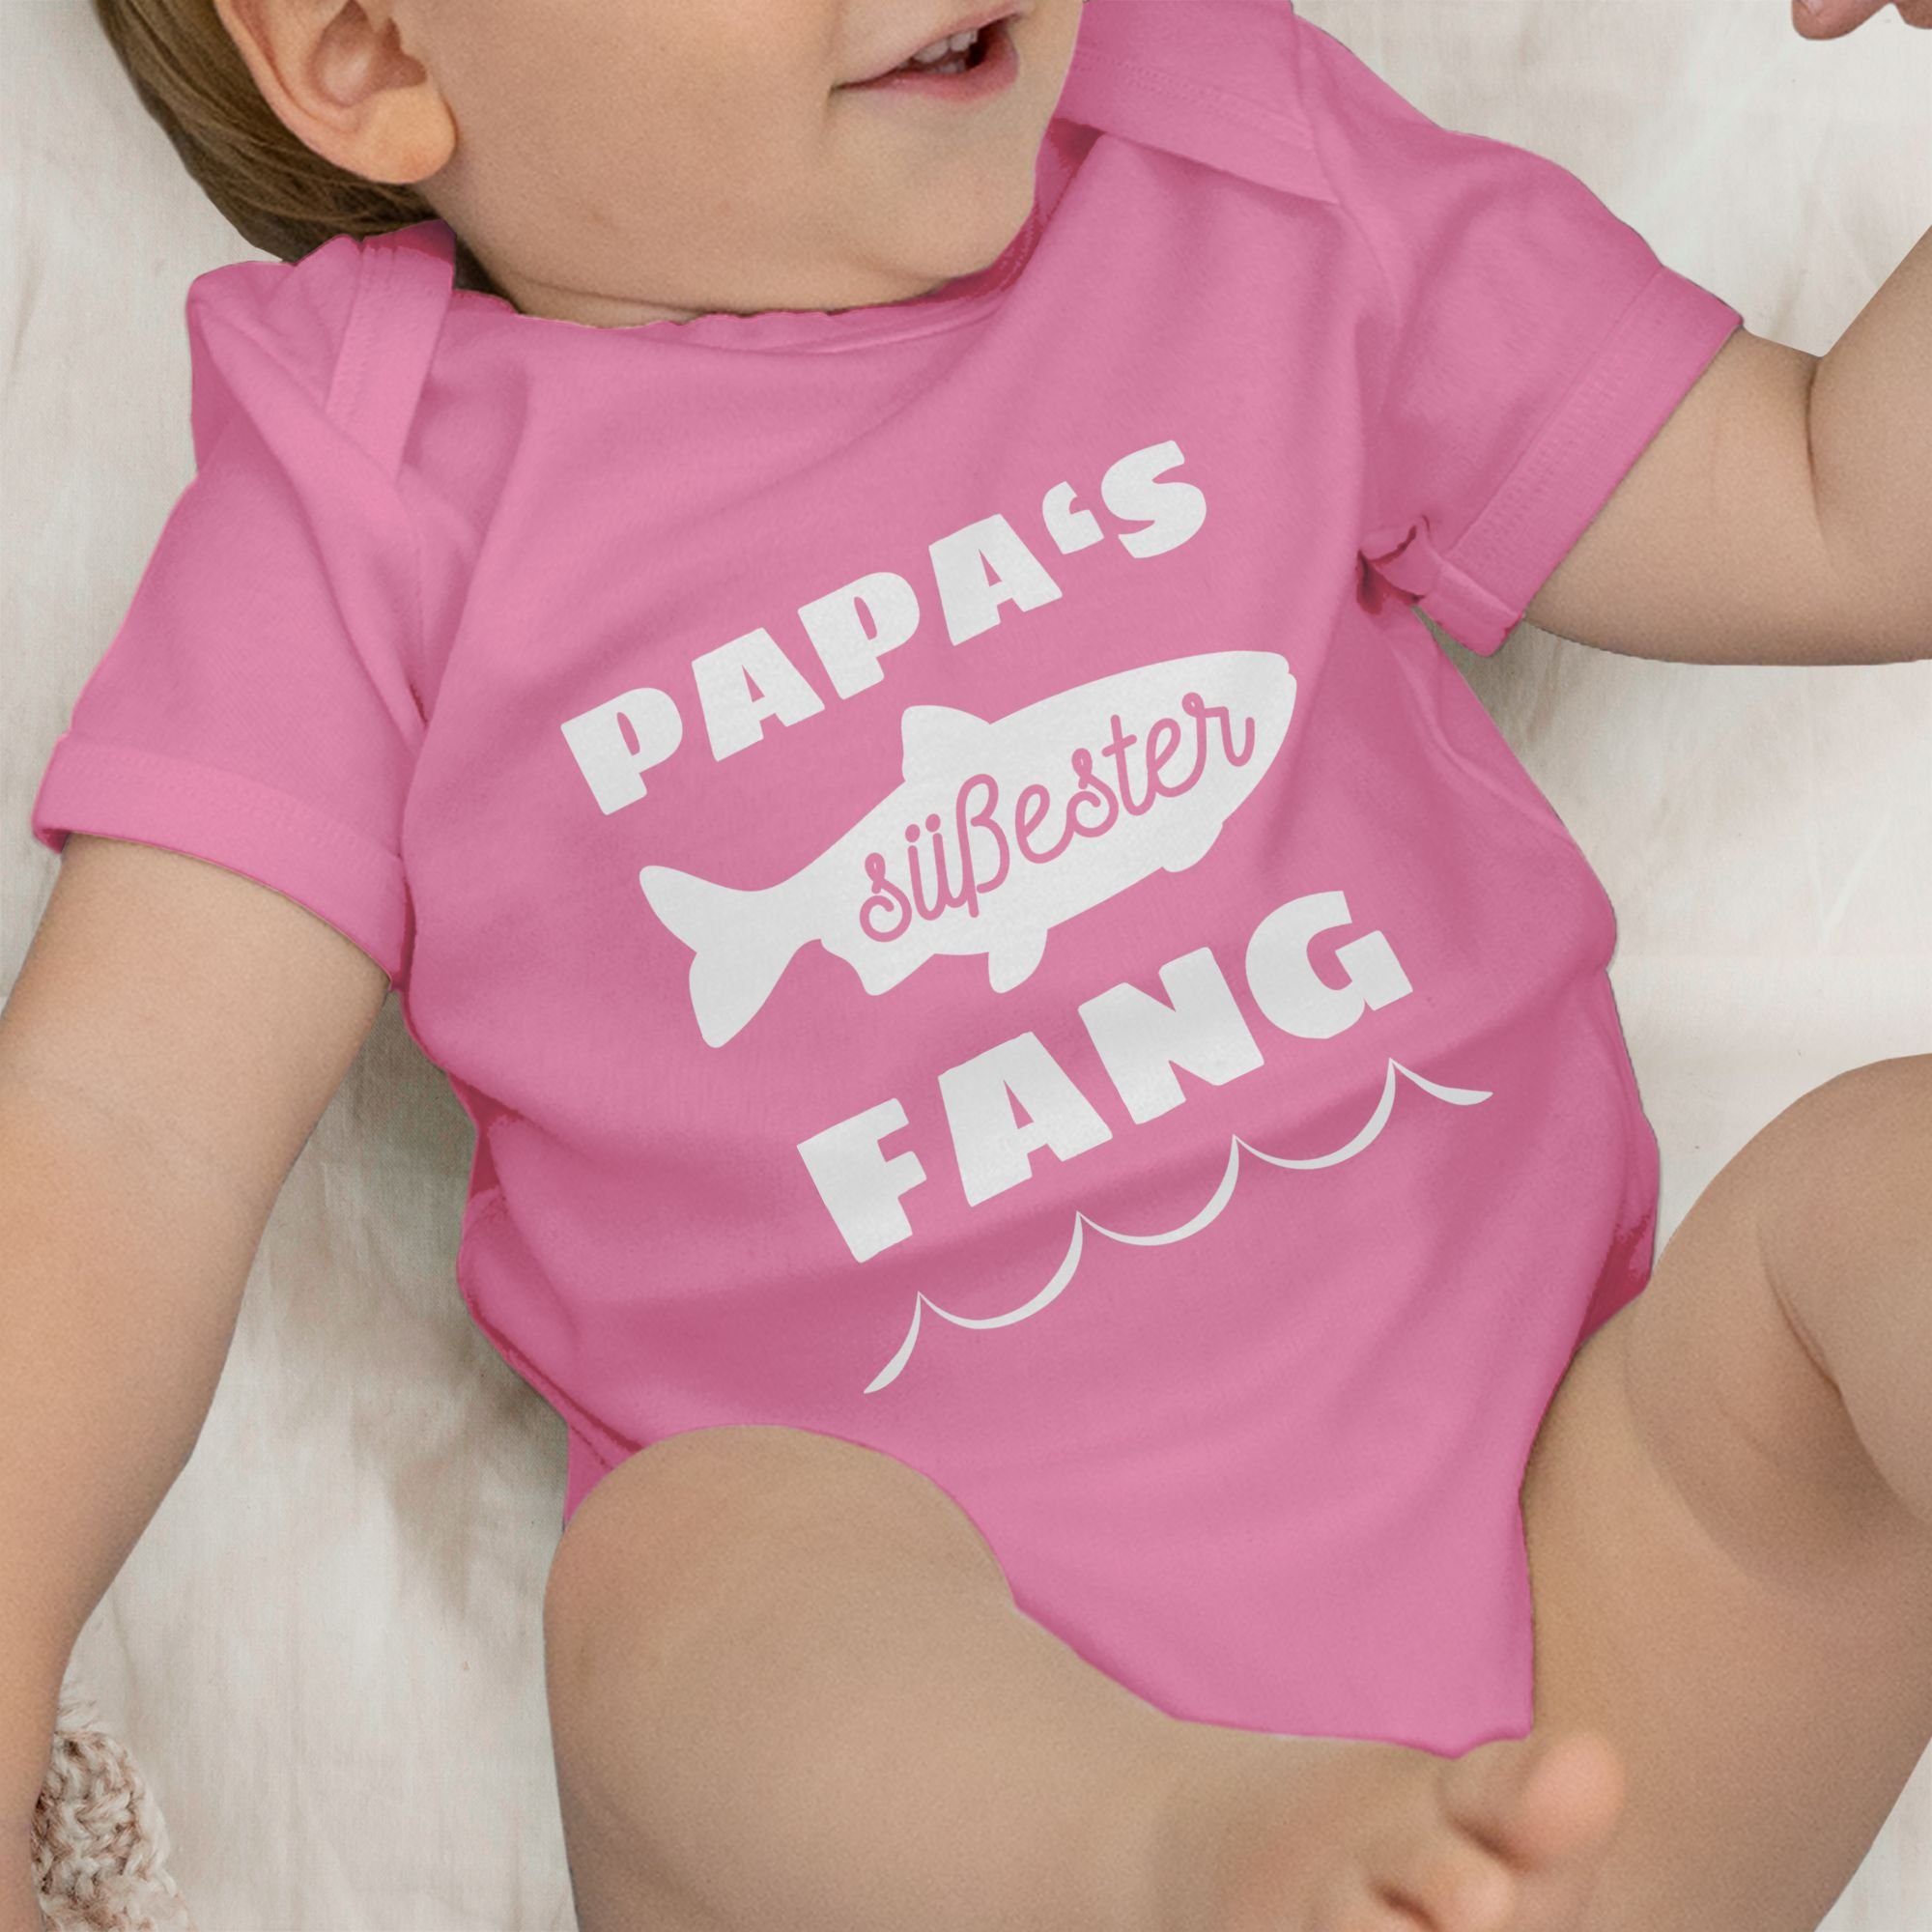 1 Vatertag Papas Shirtracer Pink süßester Geschenk Fang Shirtbody Baby